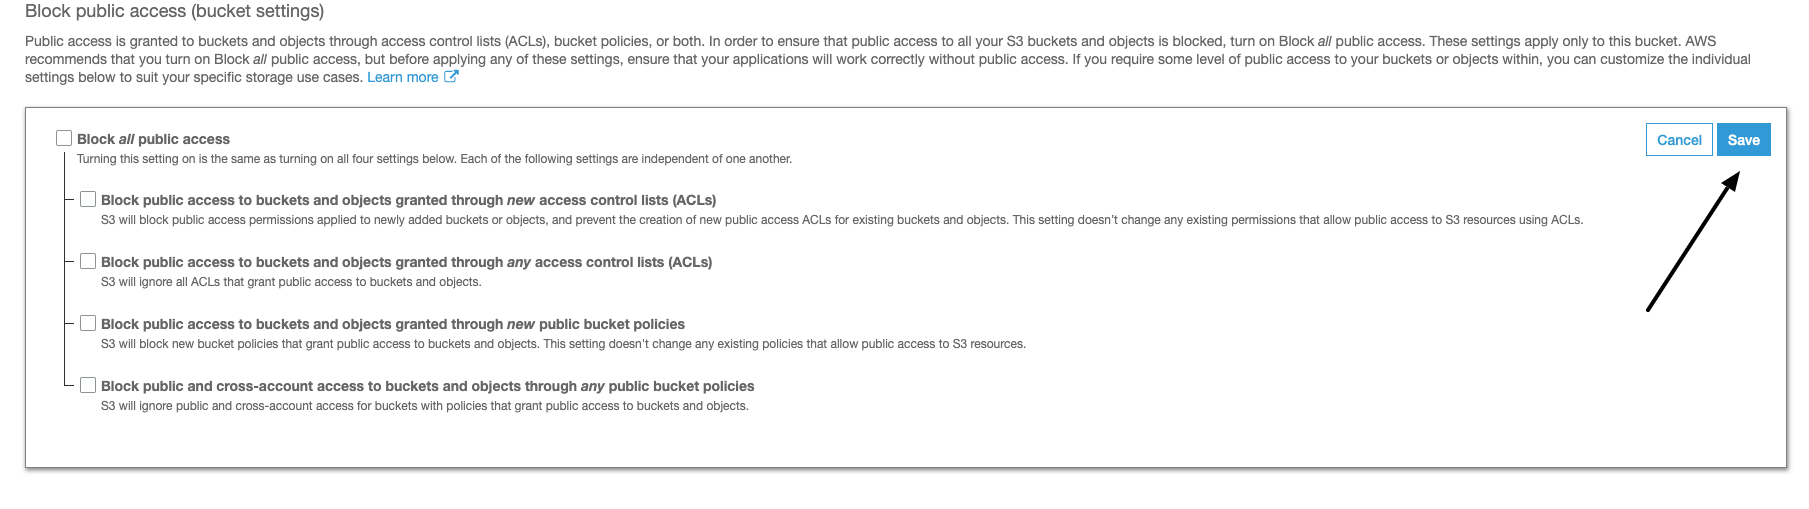 S3 bucket disable "Block public access"